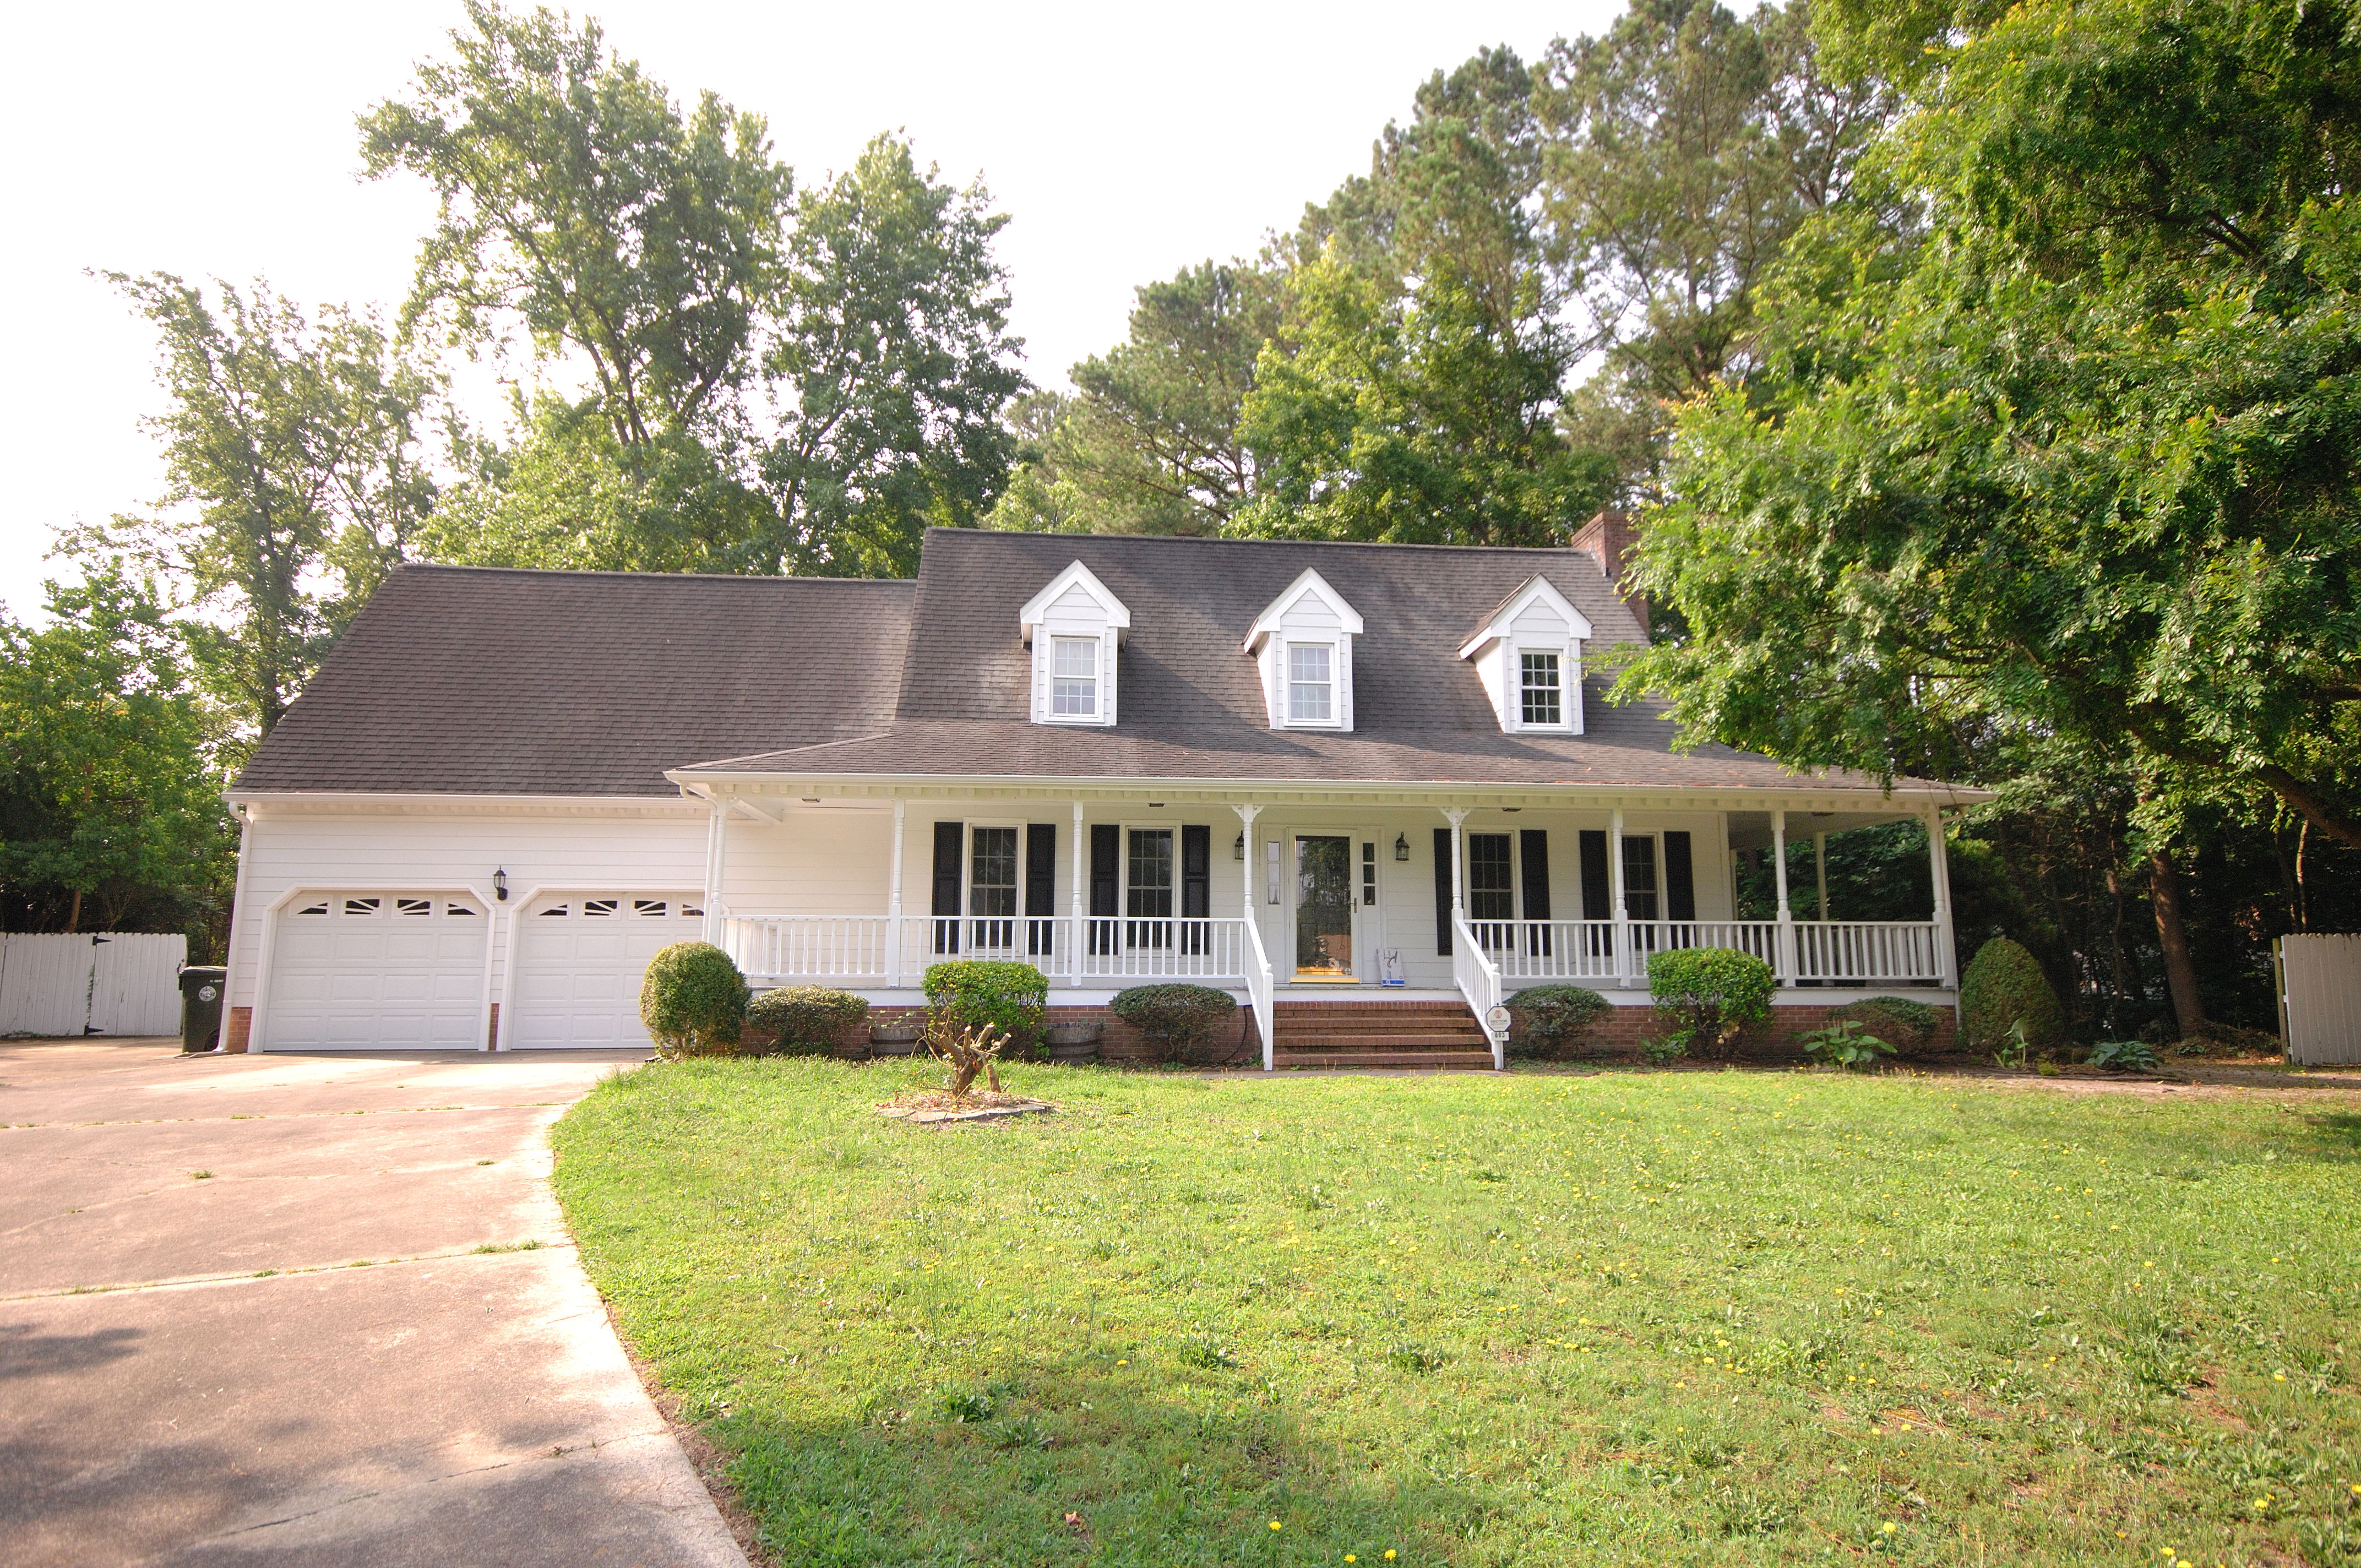 Goldsboro NC - Homes for Rent - 603 Corbin Road Goldsboro NC 27534 - Main House View